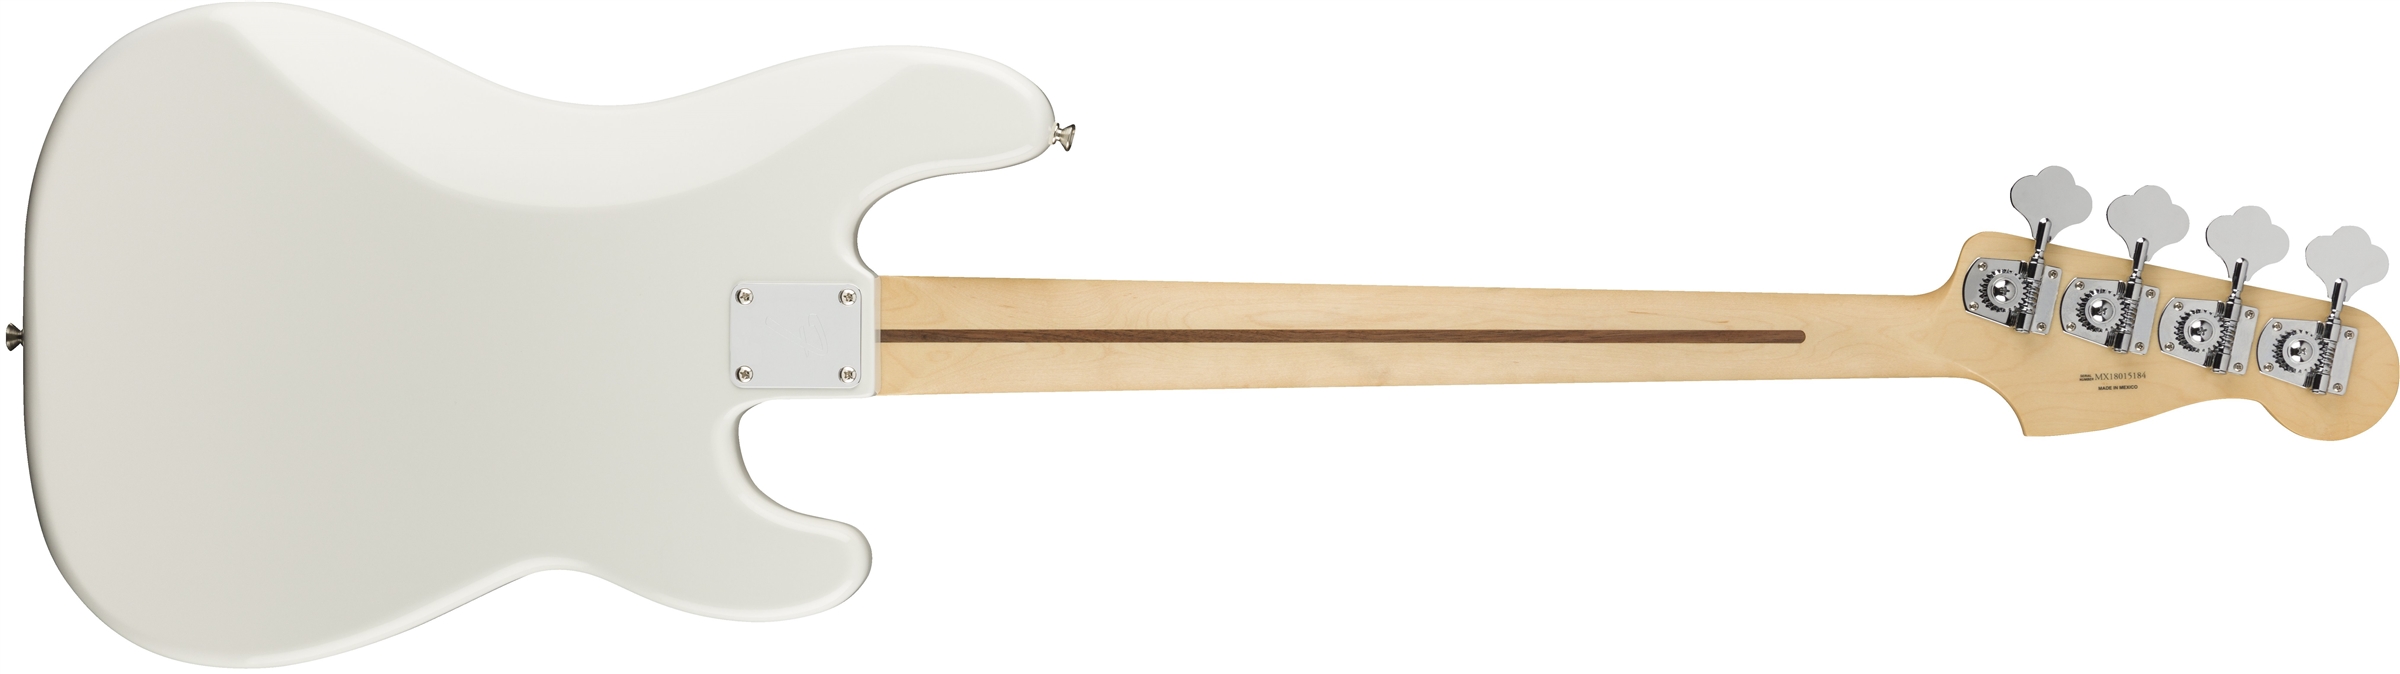 Fender Precision Bass Player Lh Gaucher Mex Pf - Polar White - Bajo eléctrico de cuerpo sólido - Variation 1